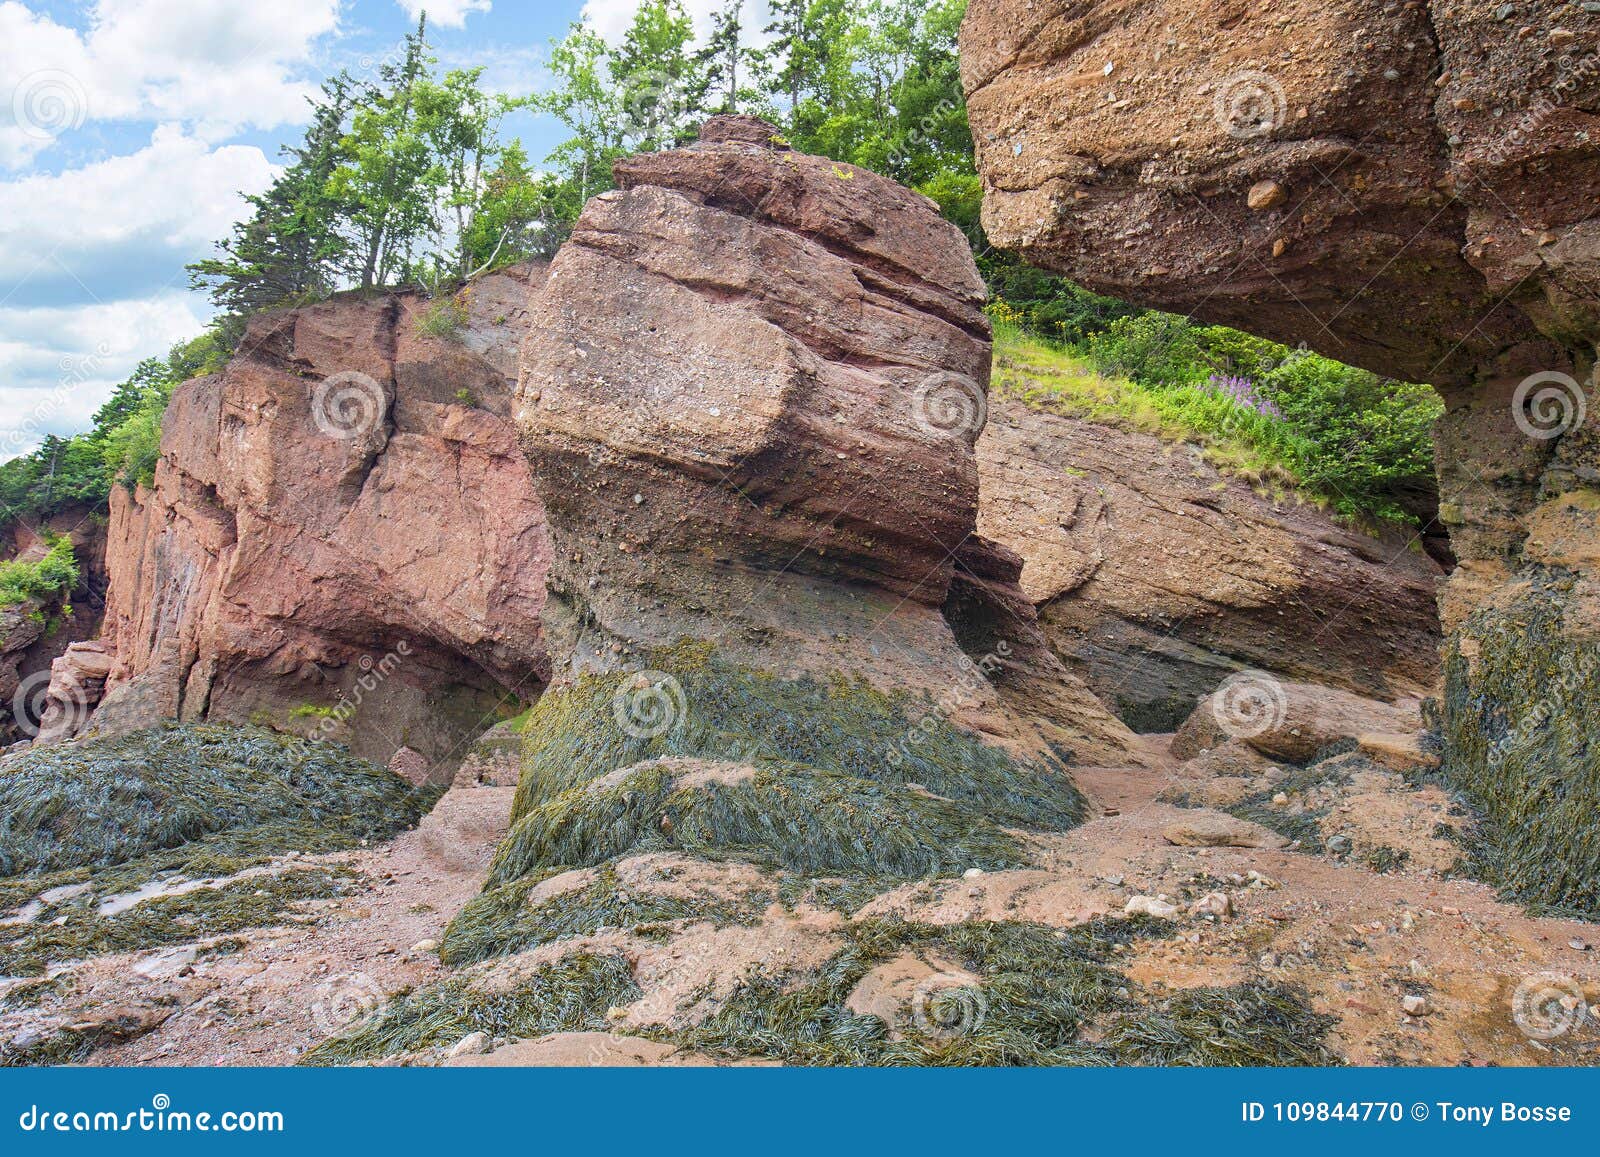 sea bedrock formations at hopewell rocks